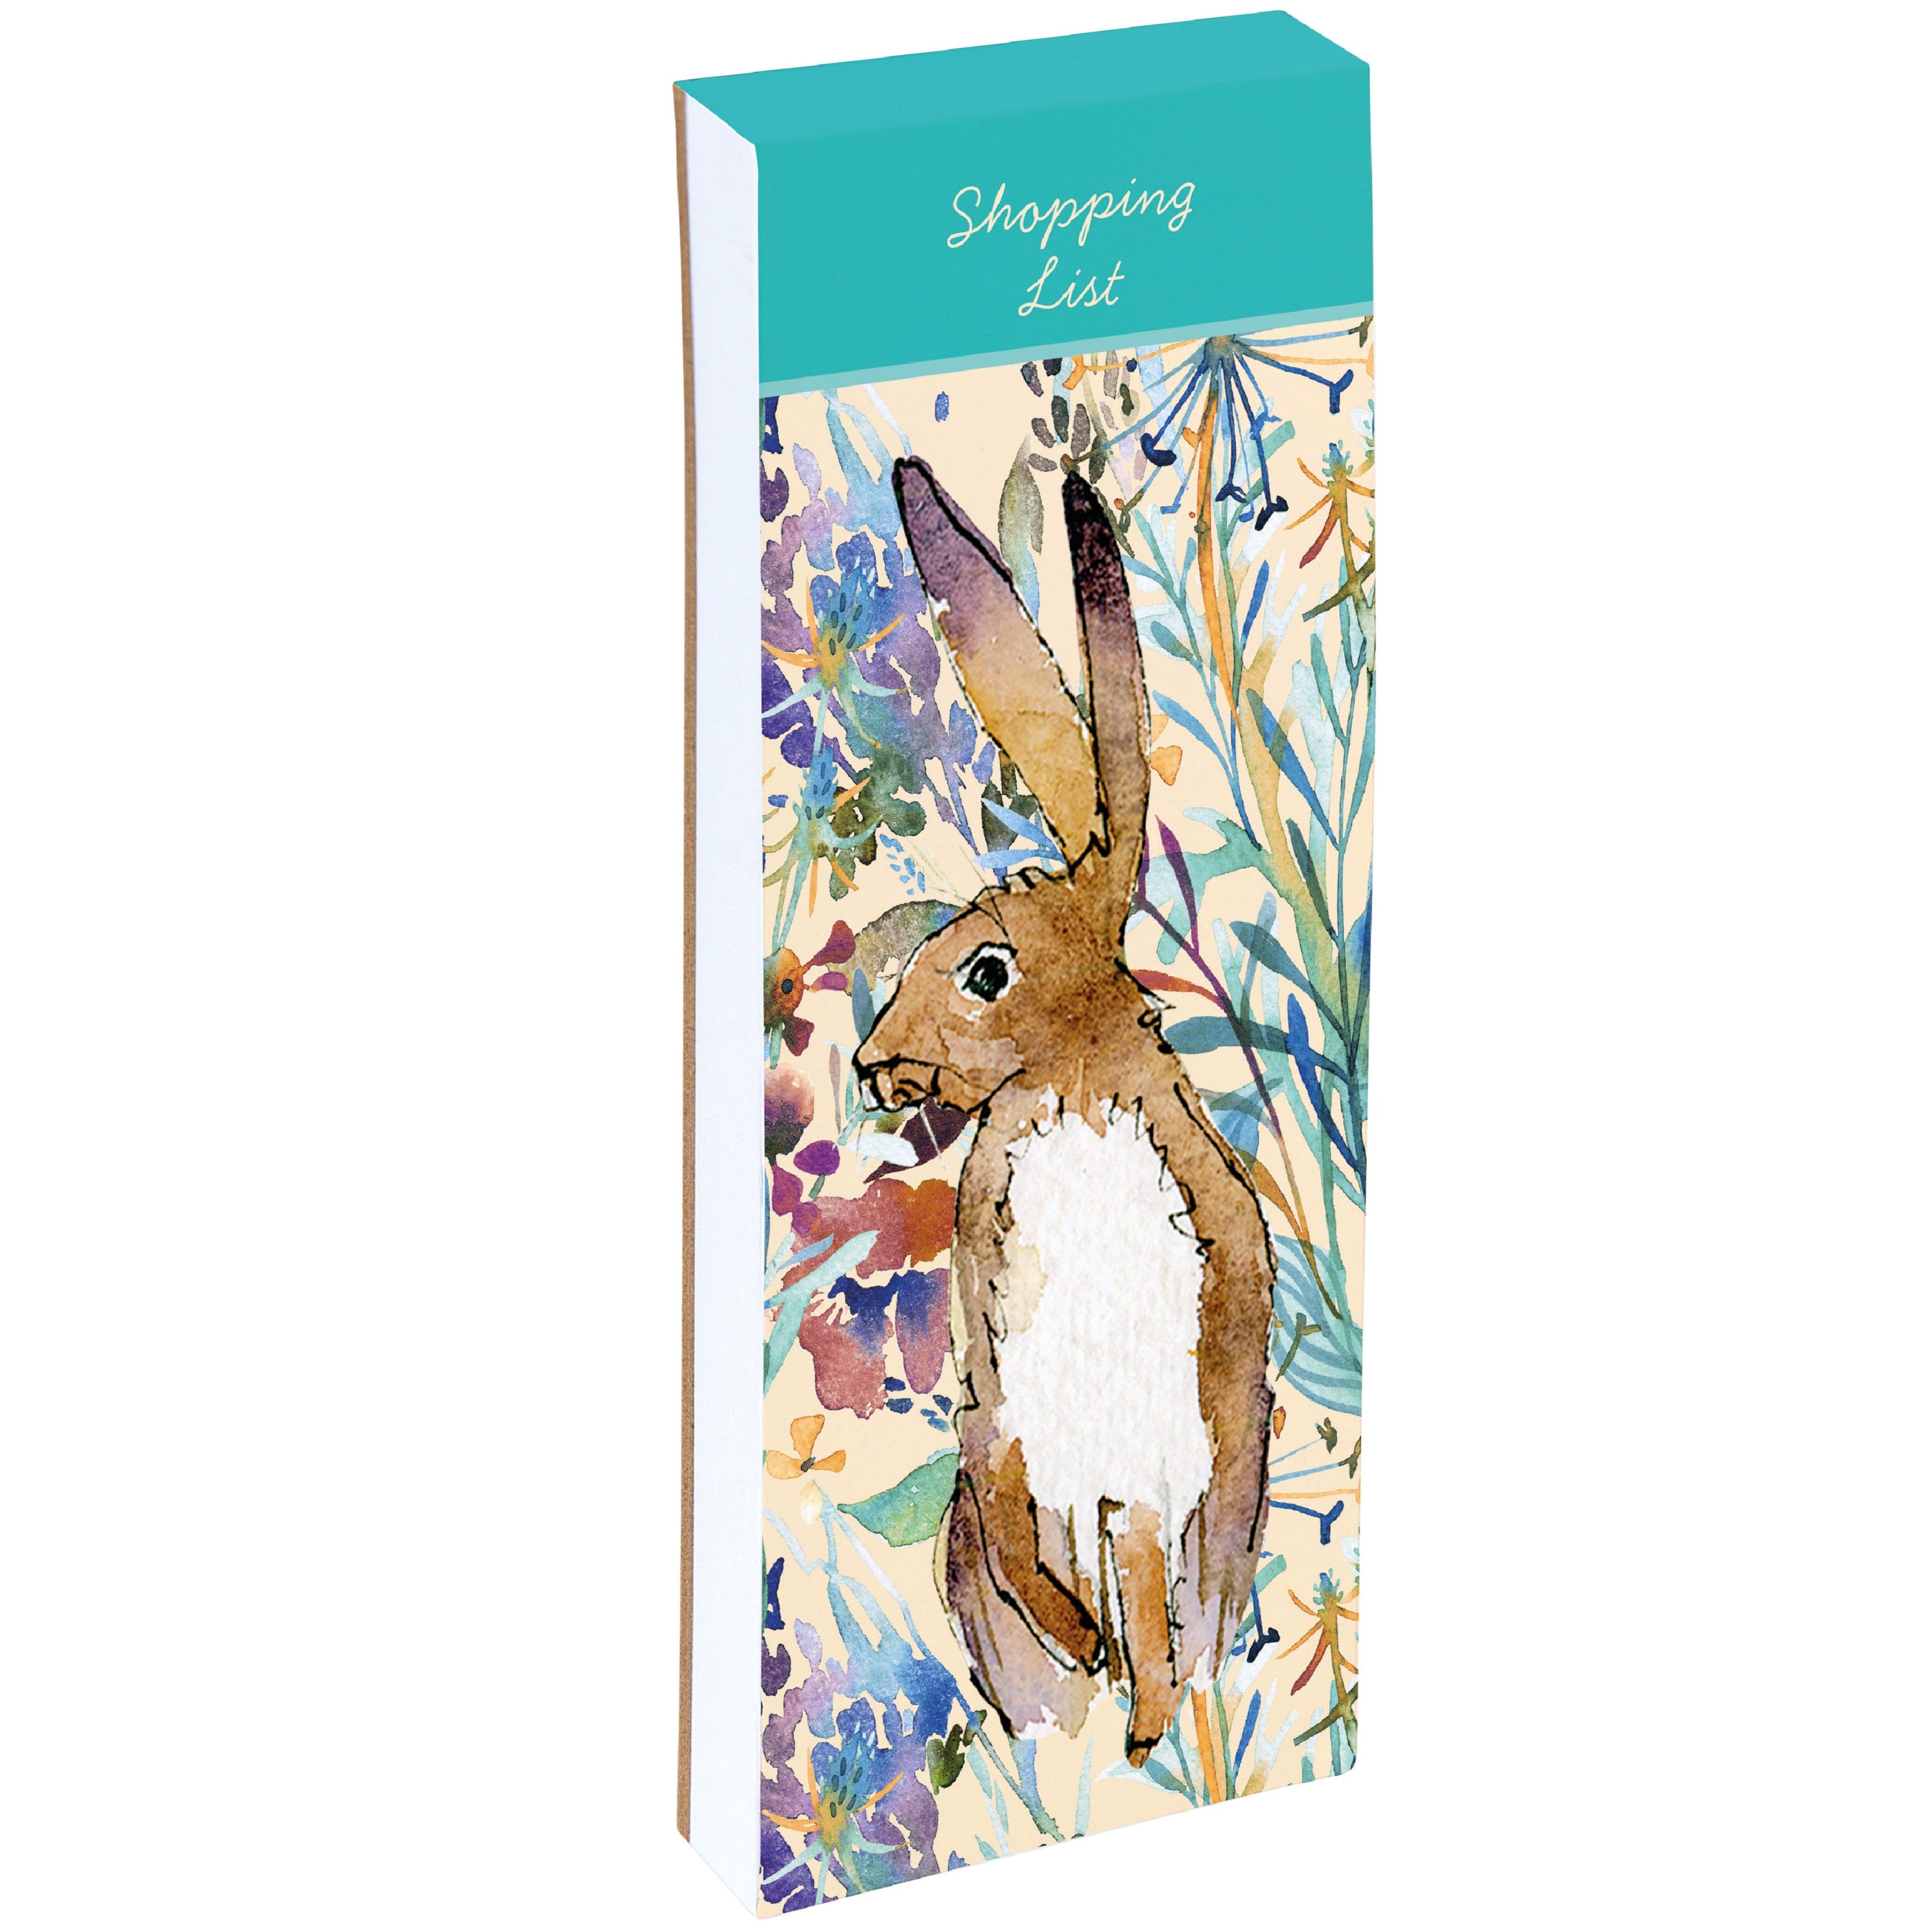 Shopping List – Kissing Hares